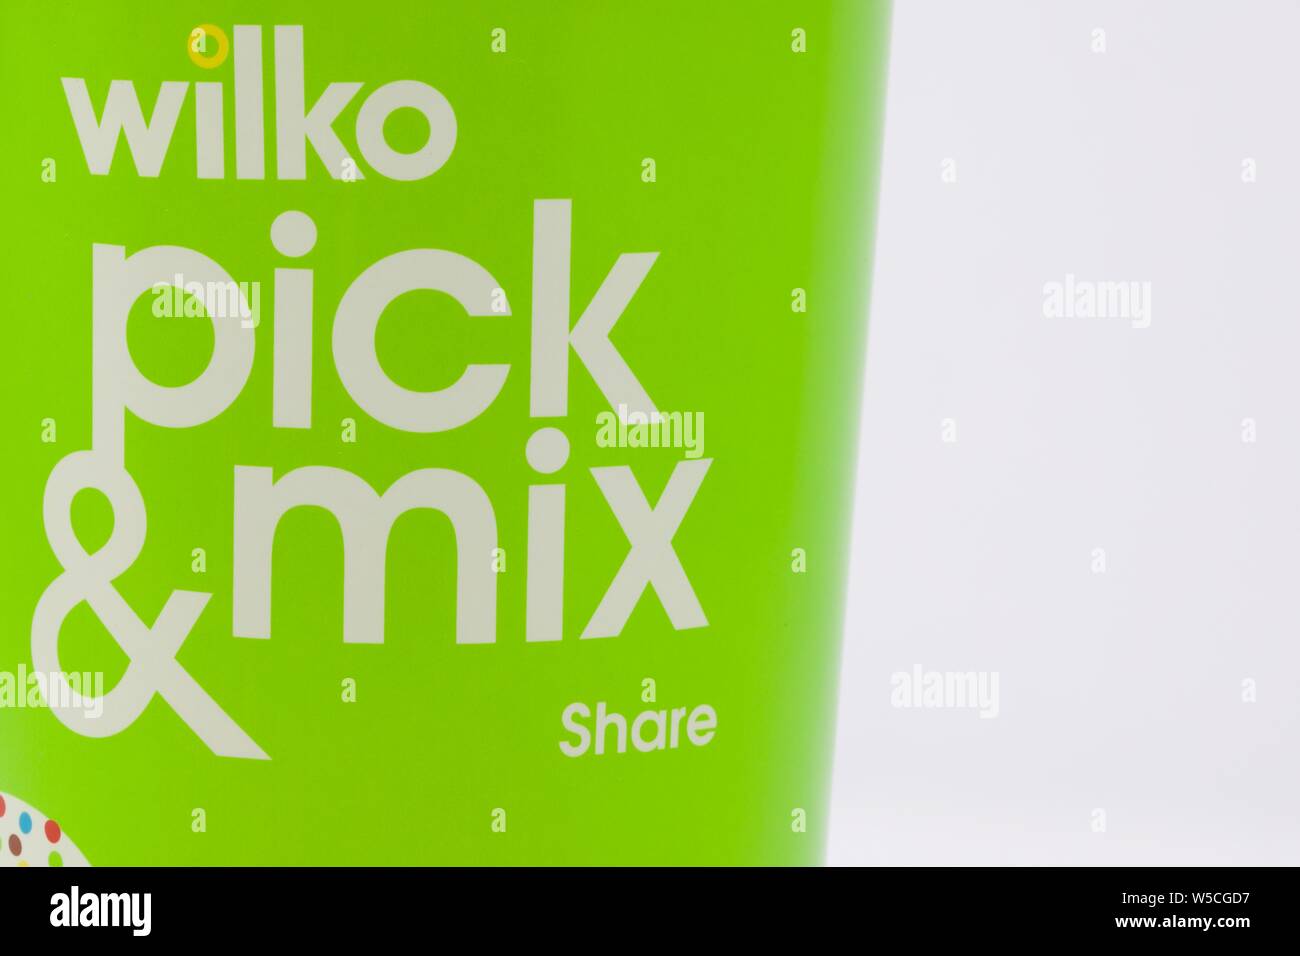 Wilko Pick and mix Stock Photo